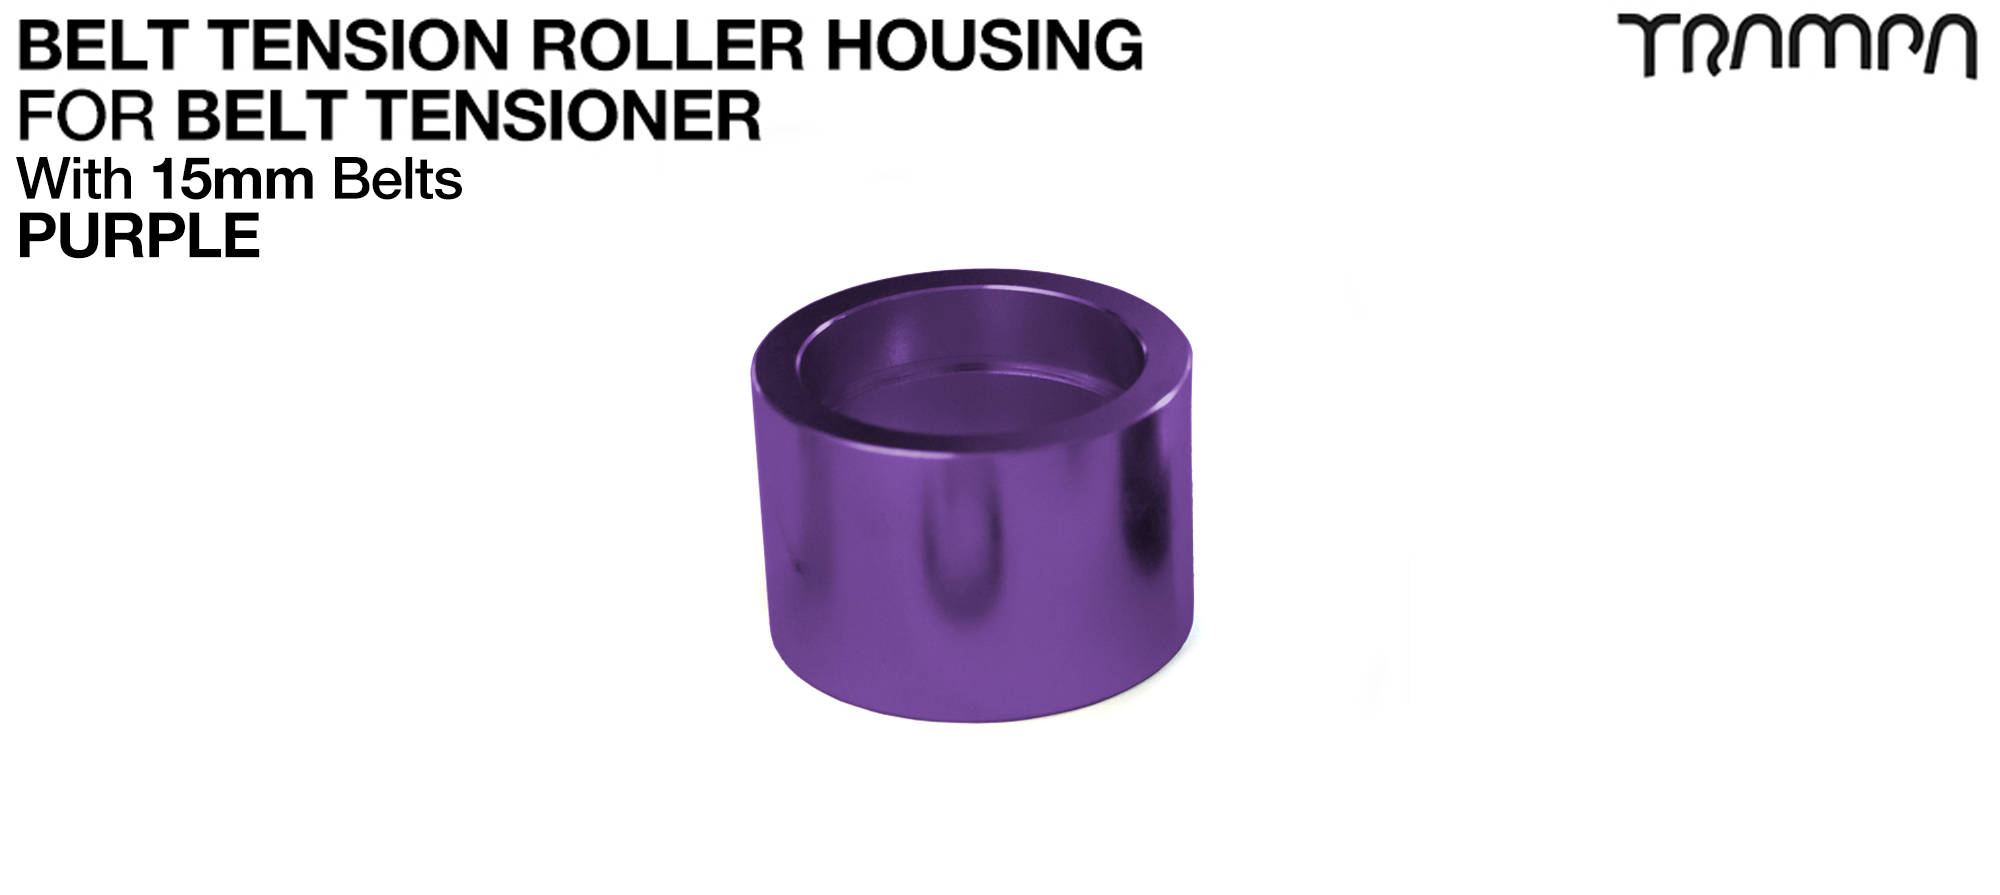 Belt Tension Roller Housing for 15mm Belts - PURPLE